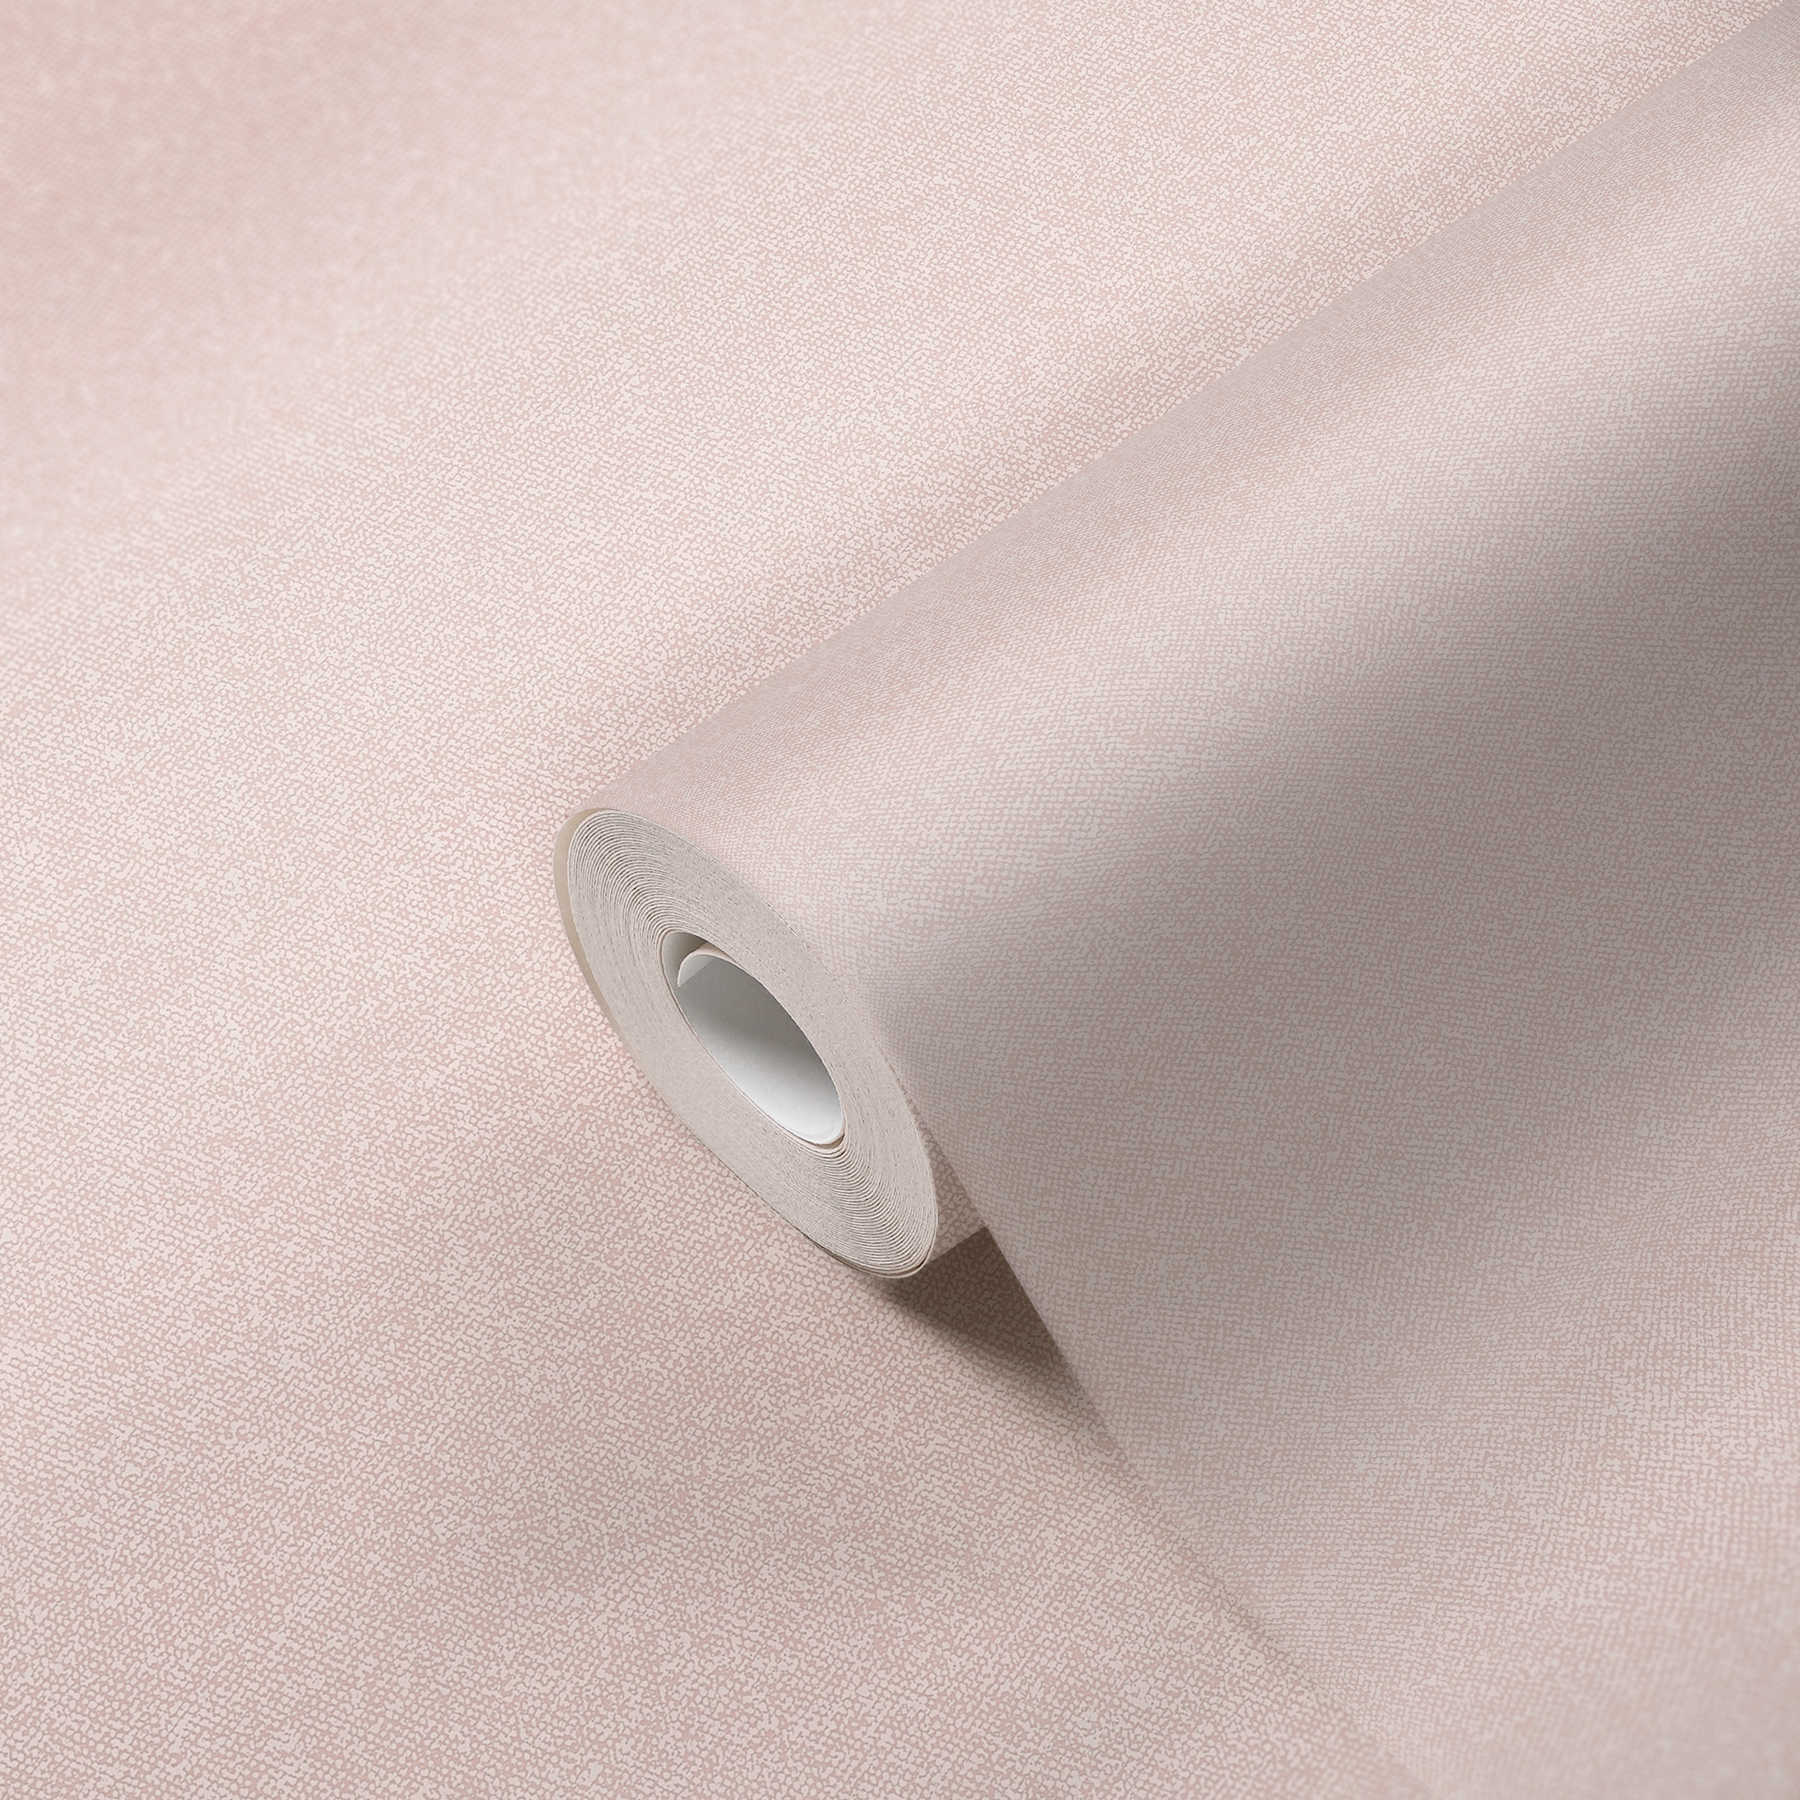             Textile optics wallpaper plain - pink, cream, white
        